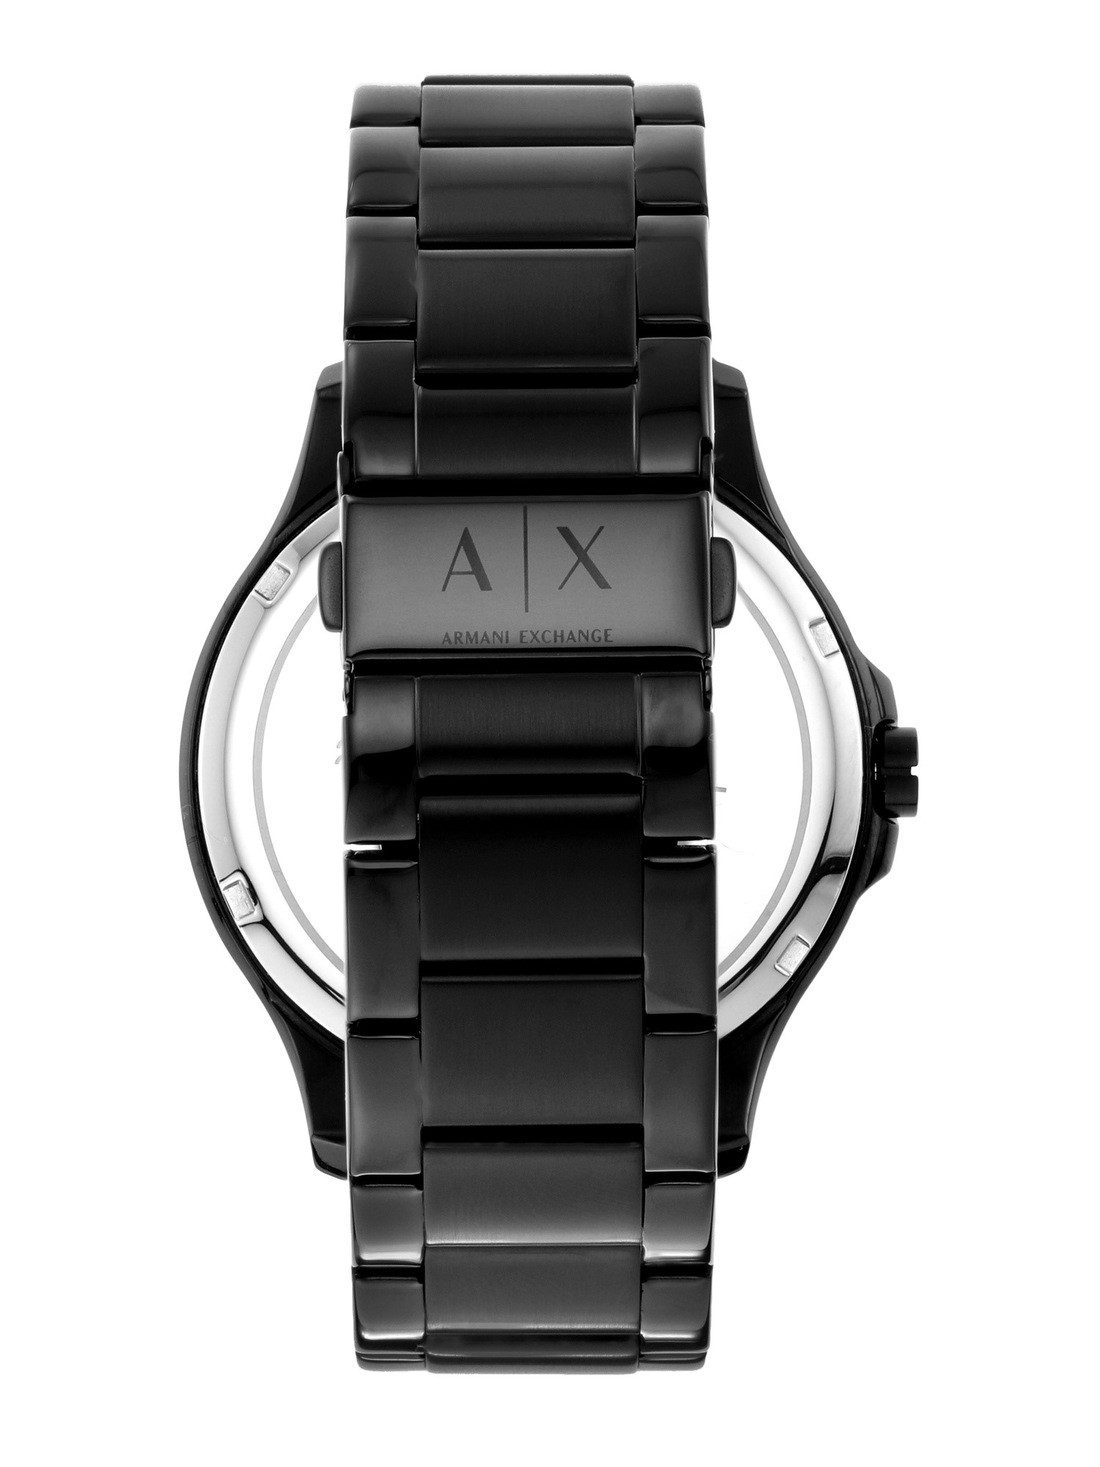 Armani Exchange Black Watch AX7101 - Watch Station India